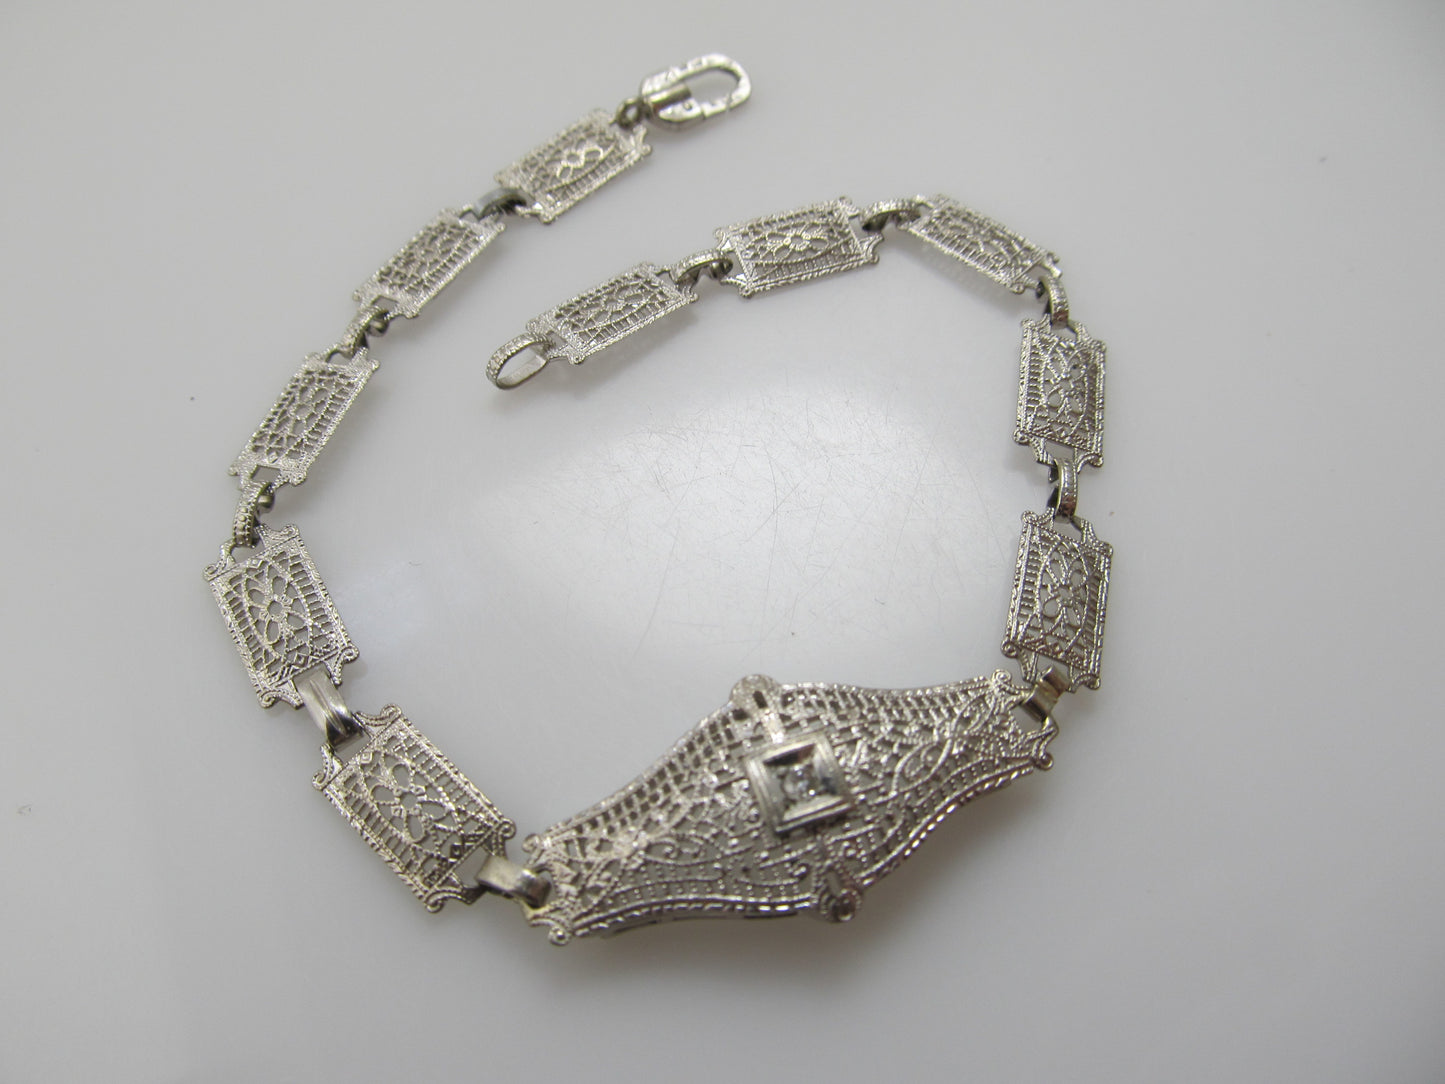 Vintage white gold filigree bracelet